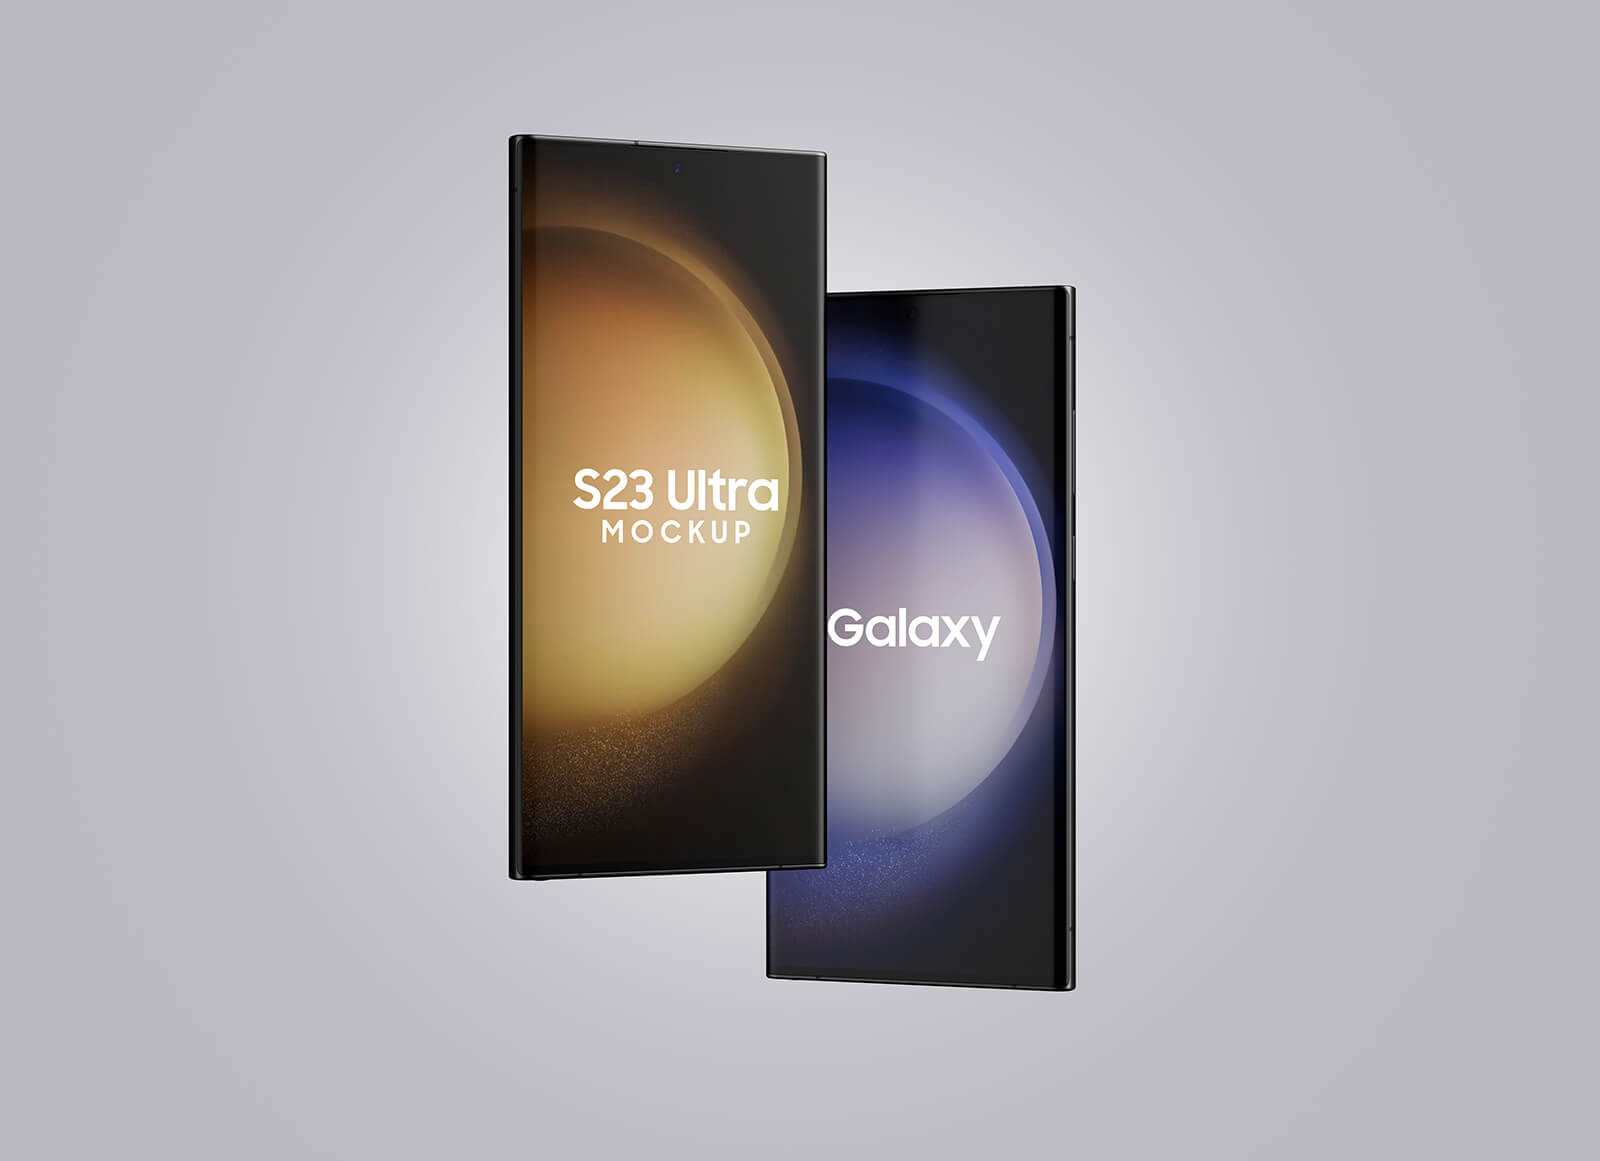 Schwimmendes Samsung Galaxy S23 Ultra Mockup